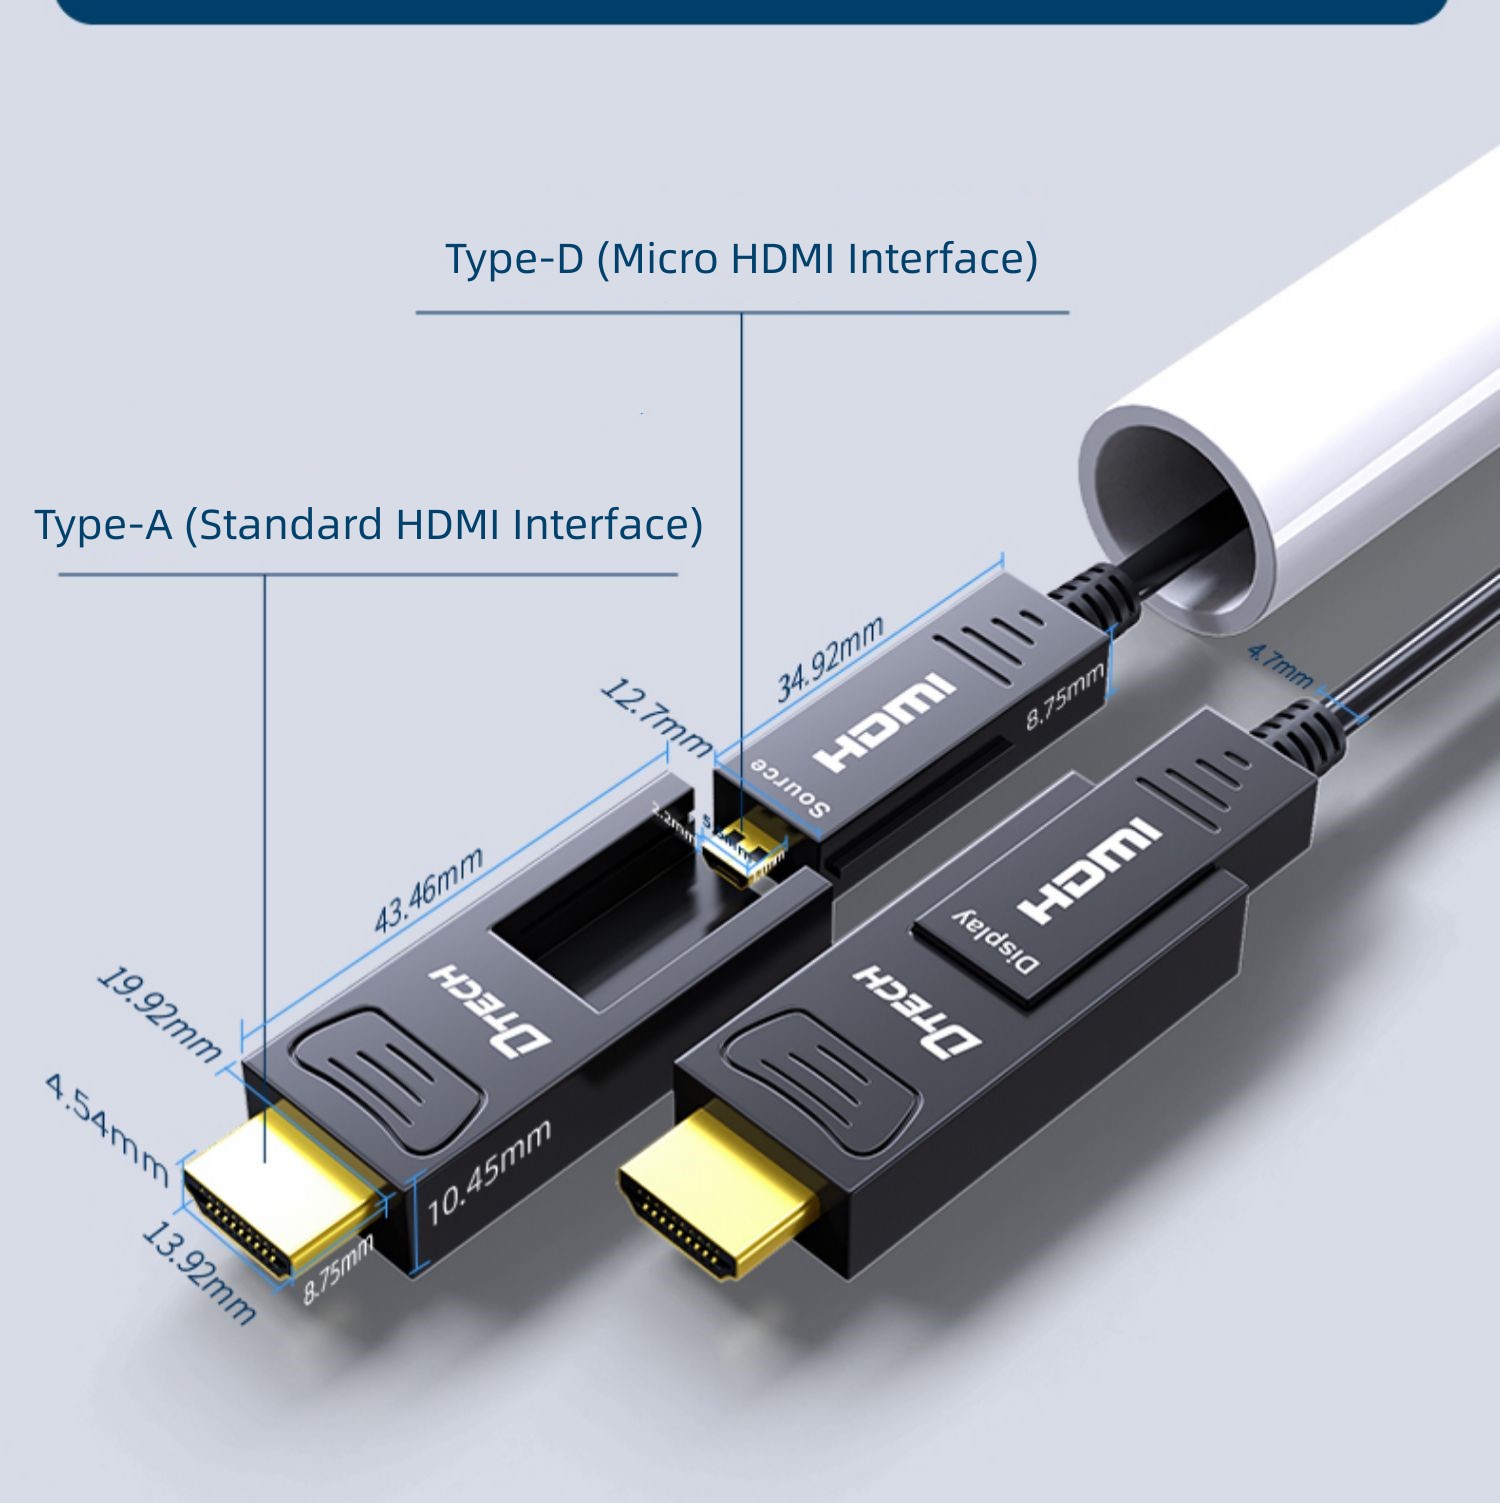 HDMI Fiber Cable